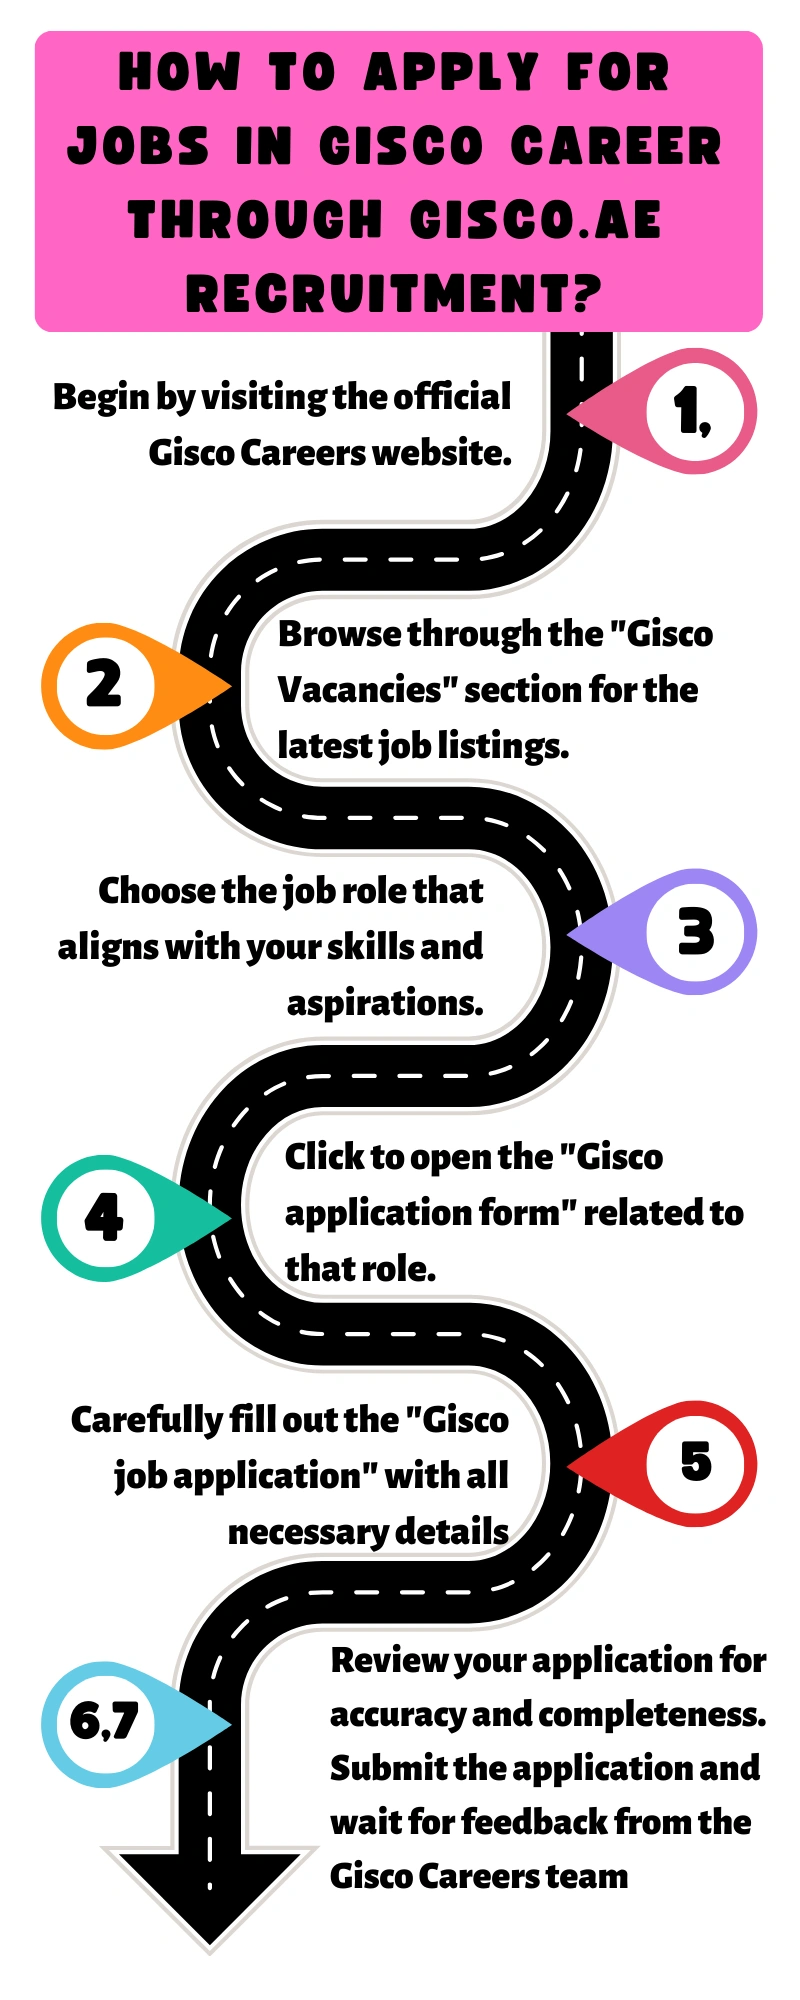 How to Apply for Jobs in Gisco Career through gisco.ae recruitment?